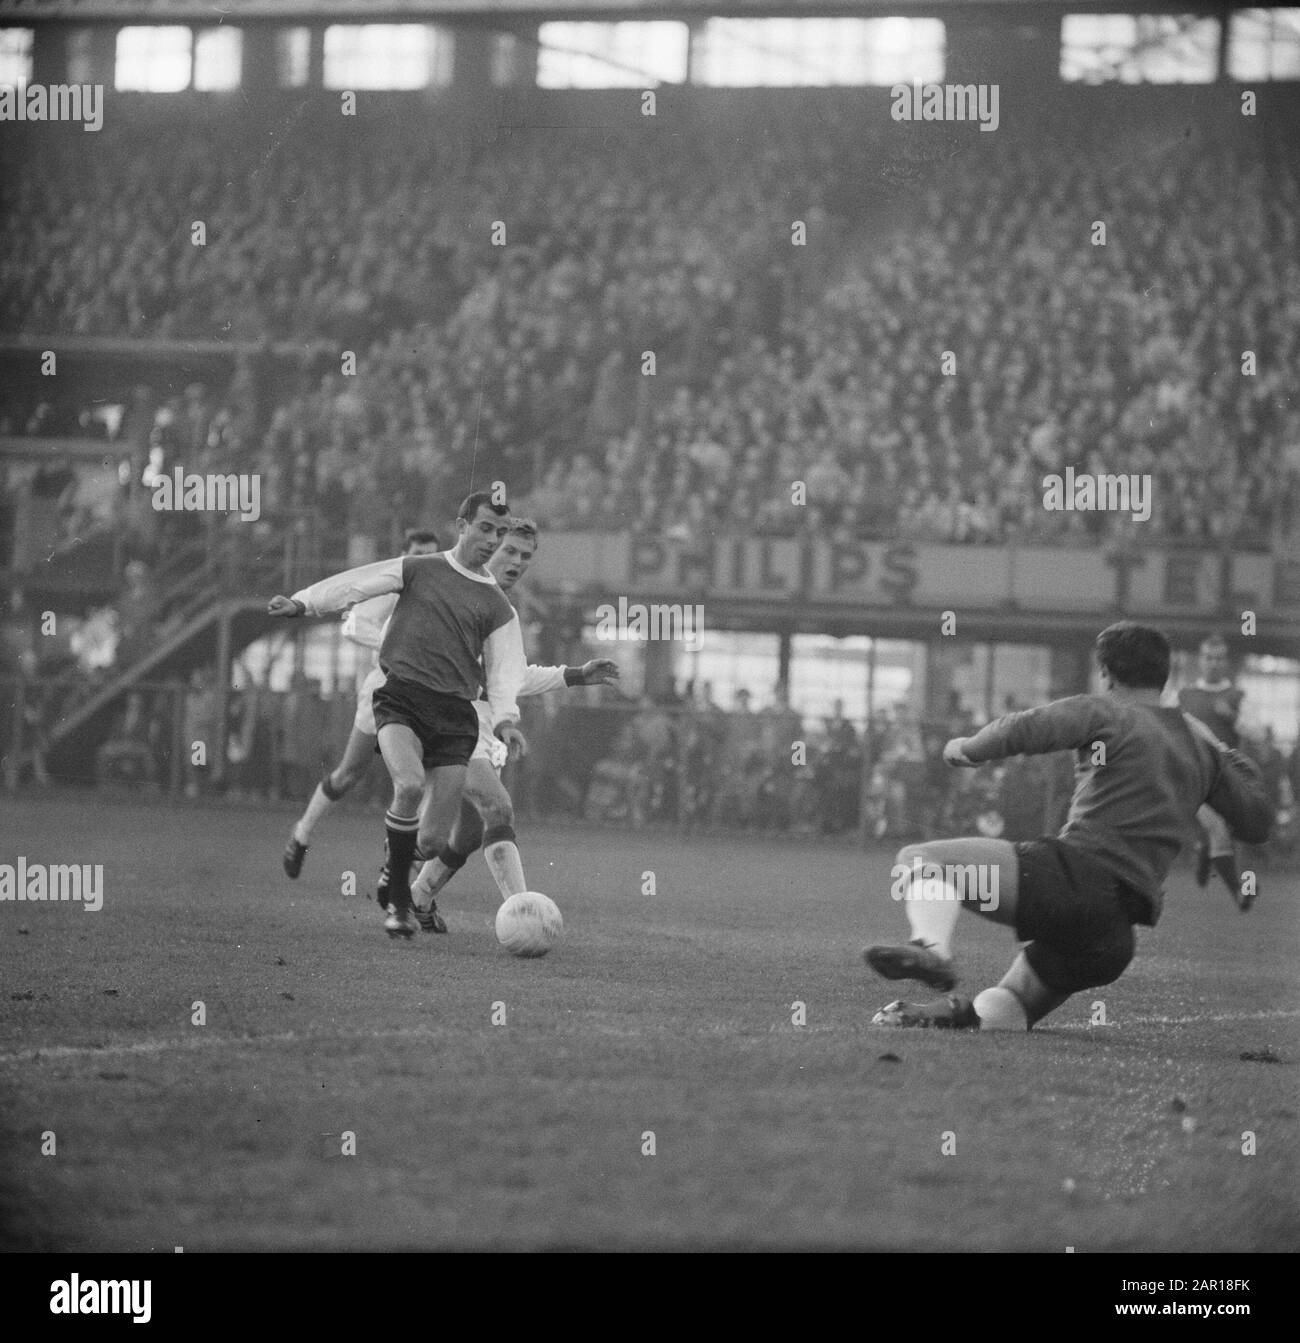 Feyenoord vs. Ajax 9-4, Coen Moulijn in duel with Ajaxieden Date: November 29, 1964 Location: Rotterdam Keywords: duels, sport, football Personal name: Moulijn, Coen Institution name: Feyenoord Stock Photo